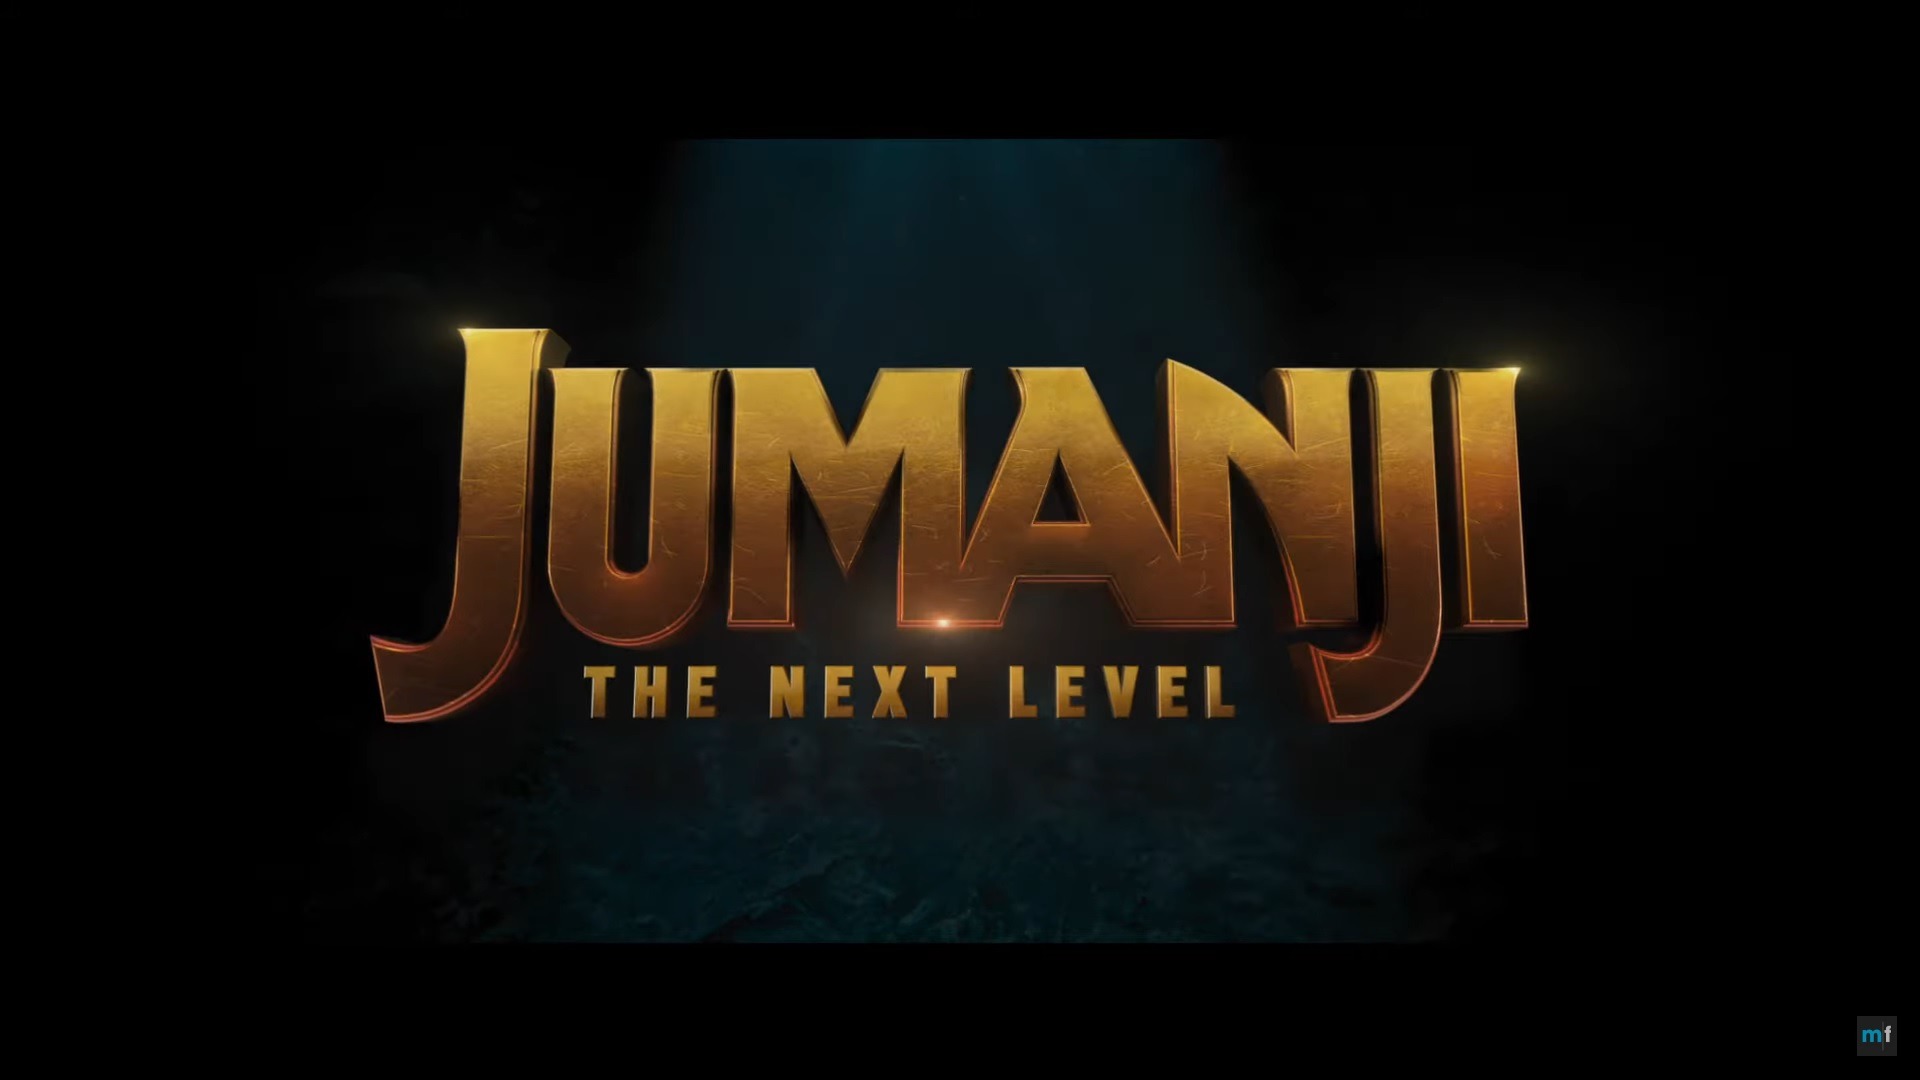 Jumanji: The Next Level (2019) - Trailer - MEGANUT1920 x 1080